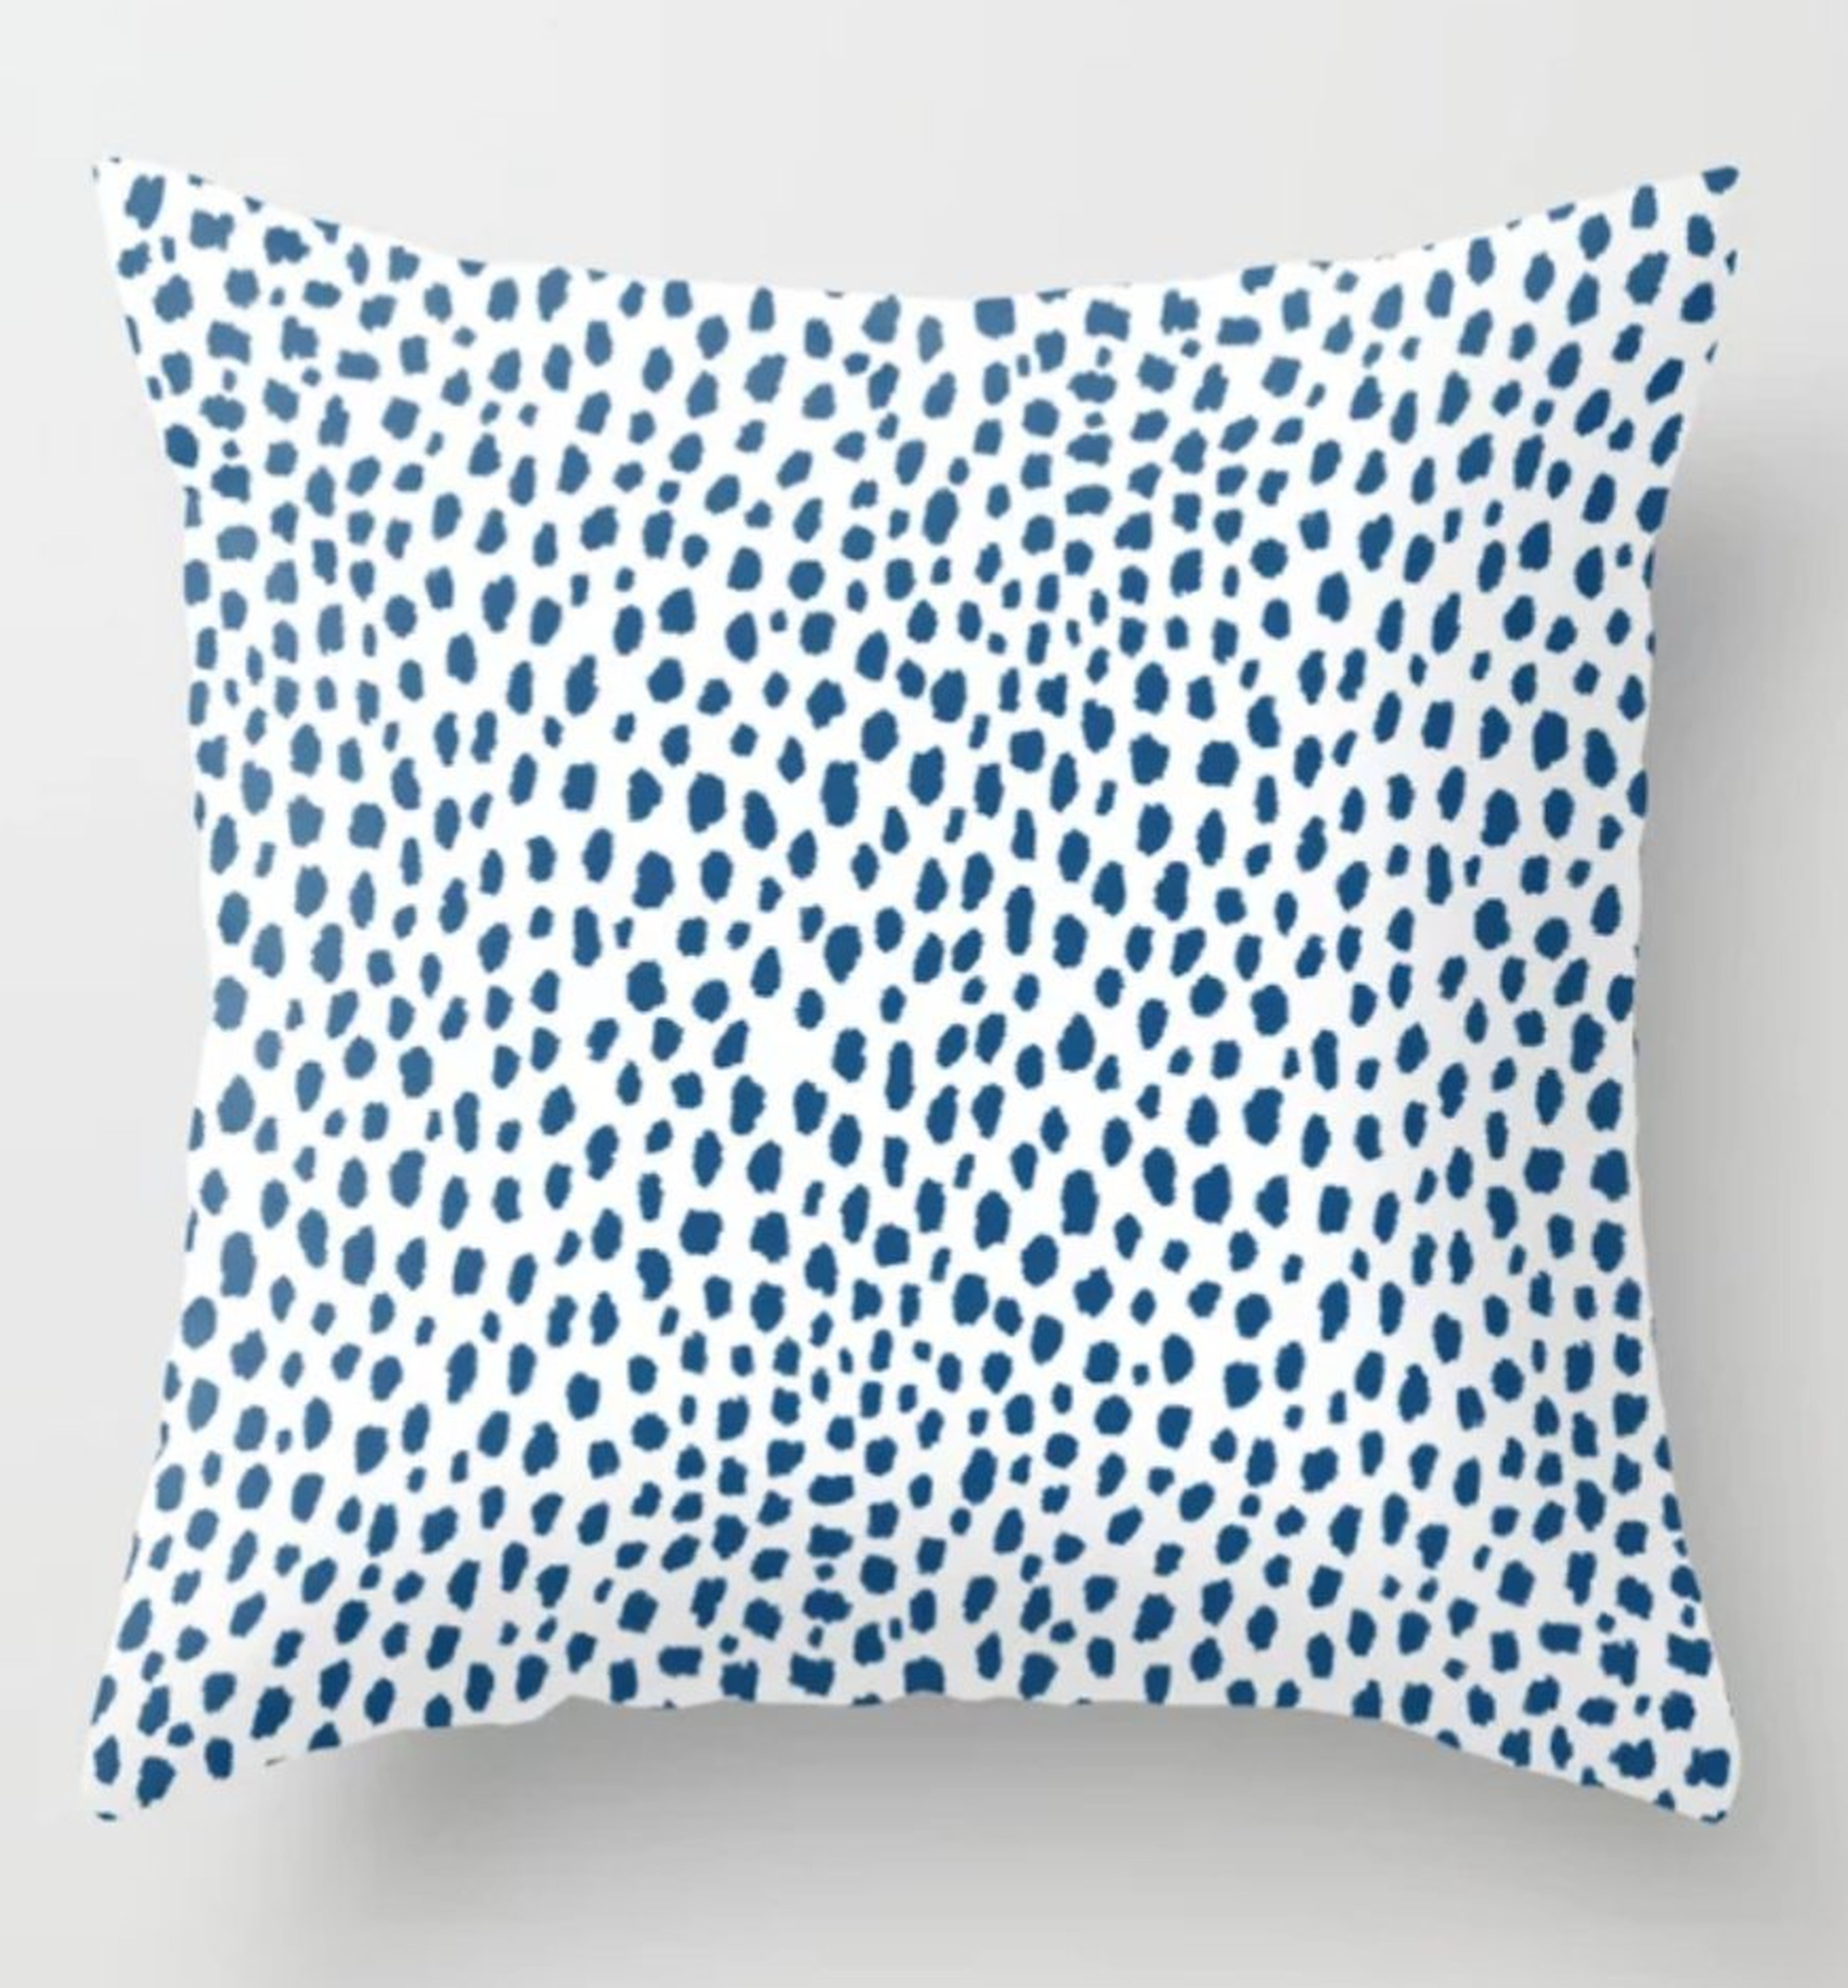 Handmade Polka Dot Paint Brush Pattern (Pantone Classic Blue and White) Throw Pillow - Society6